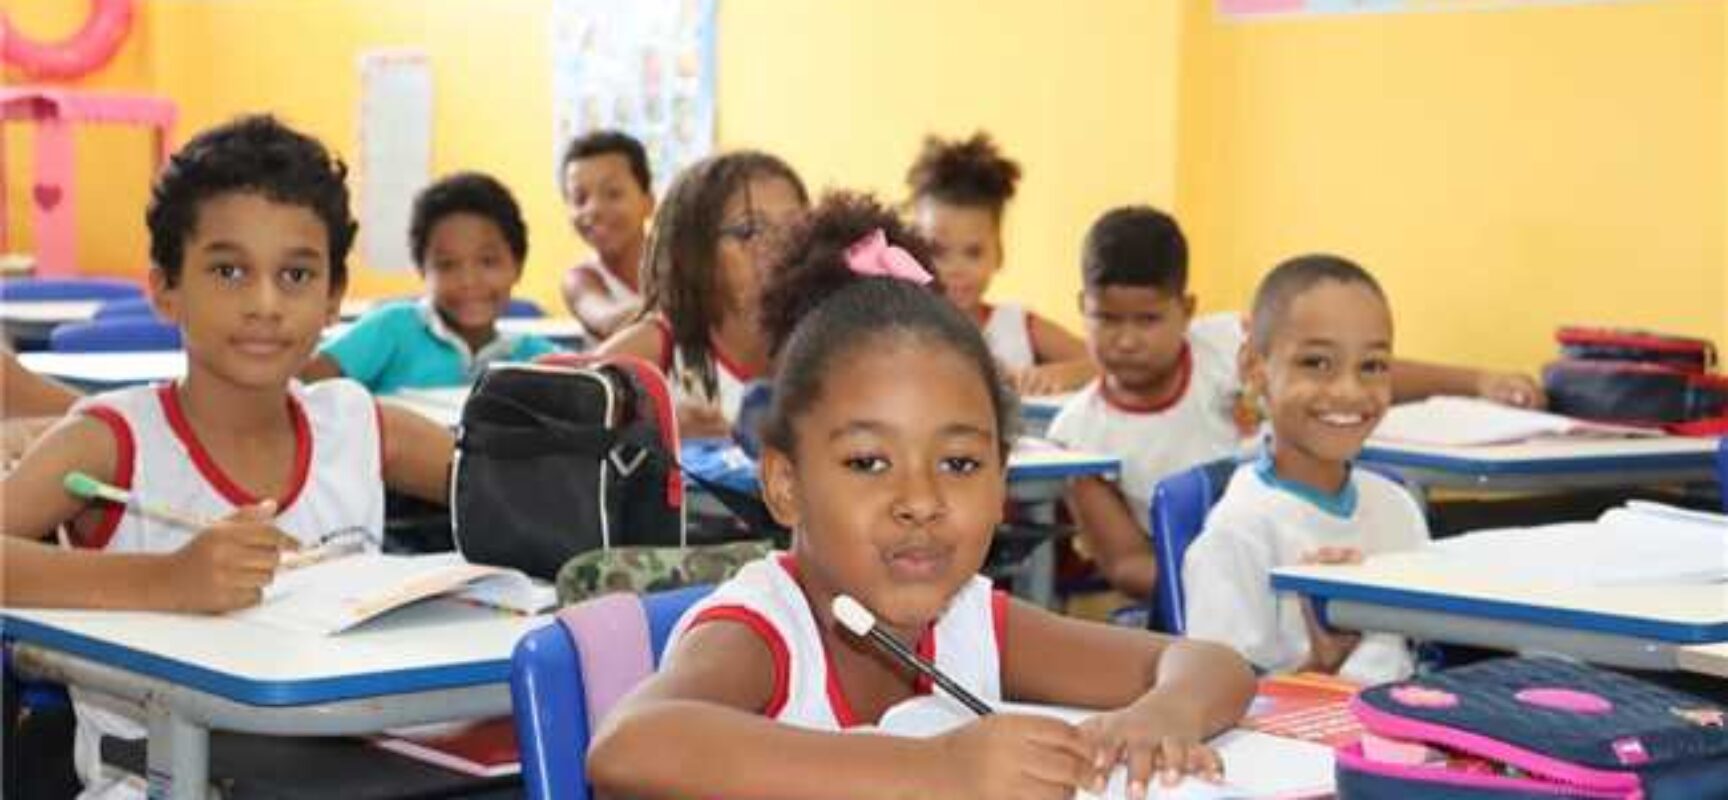 Ilhéus: Escola Municipal Pinóquio é revitalizada, beneficiando mais de 500 alunos